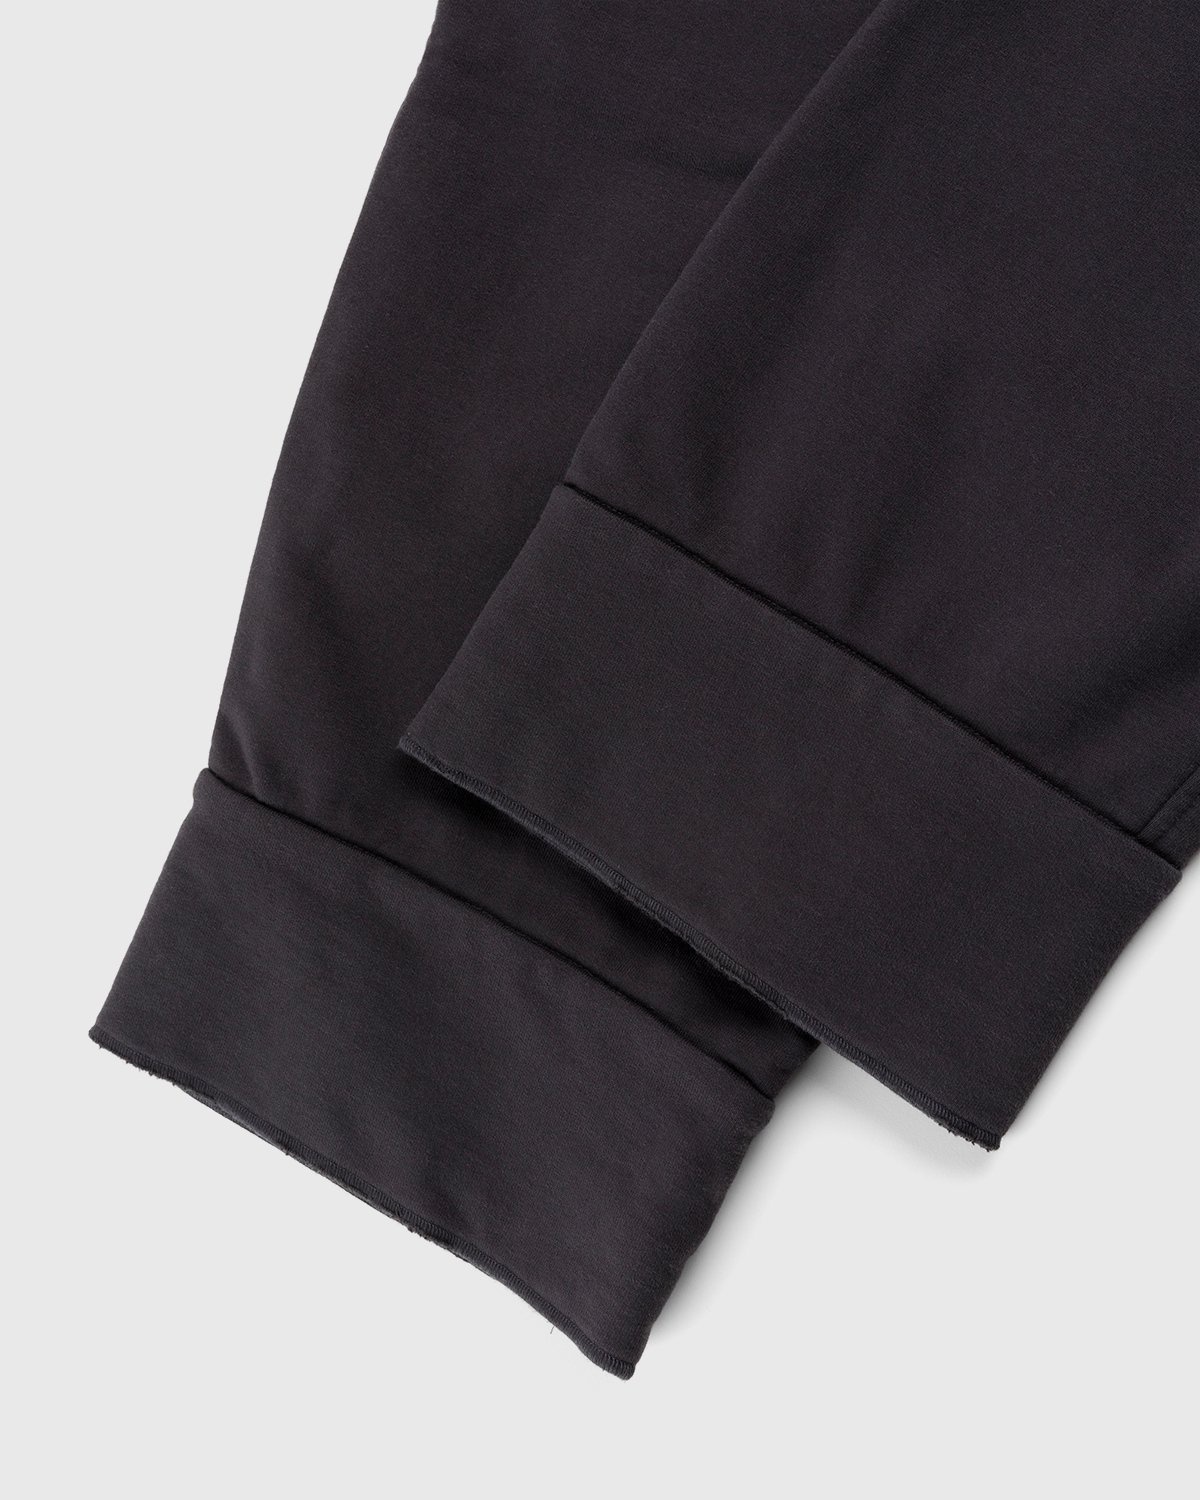 Maison Margiela – Tailored Cotton Trousers Washed Black - Pants - Black - Image 4